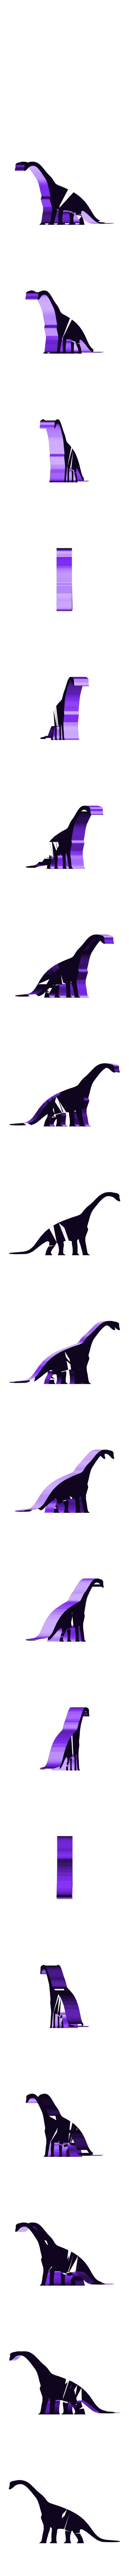 Plateosaurus.stl Download free STL file Dinosaur Island - Plateosaurus • 3D printing object, Robh